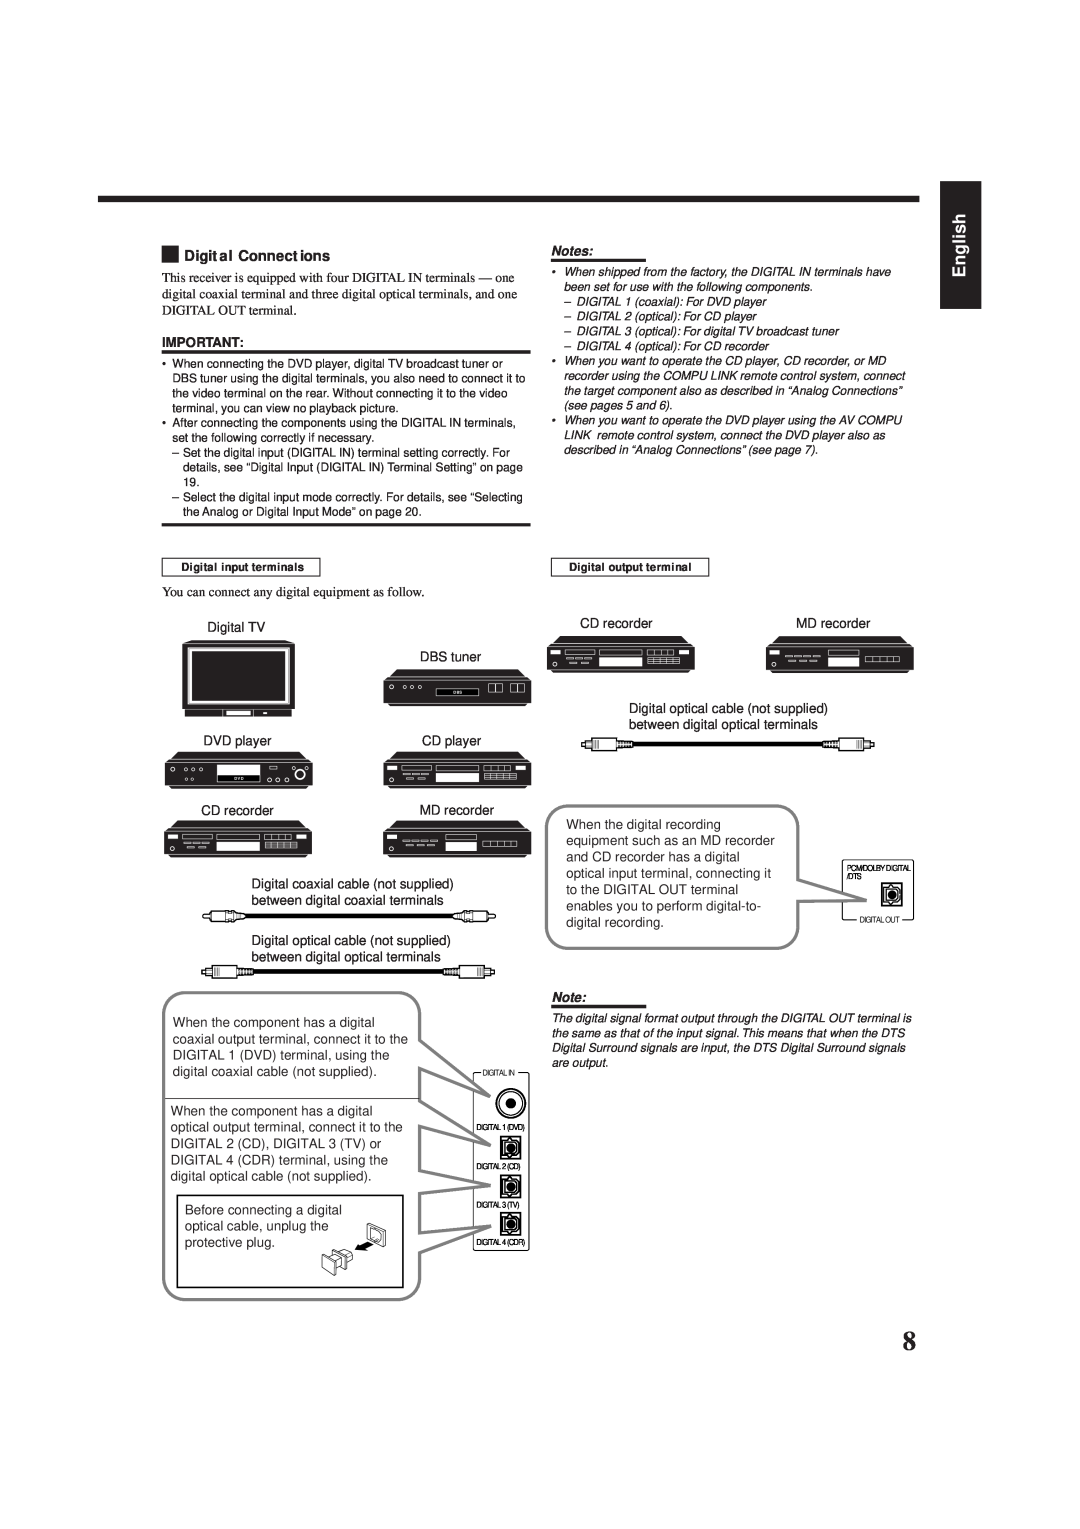 JVC RX-8012VSL manual English, Digital Connections, Digital input terminals, Digital output terminal 